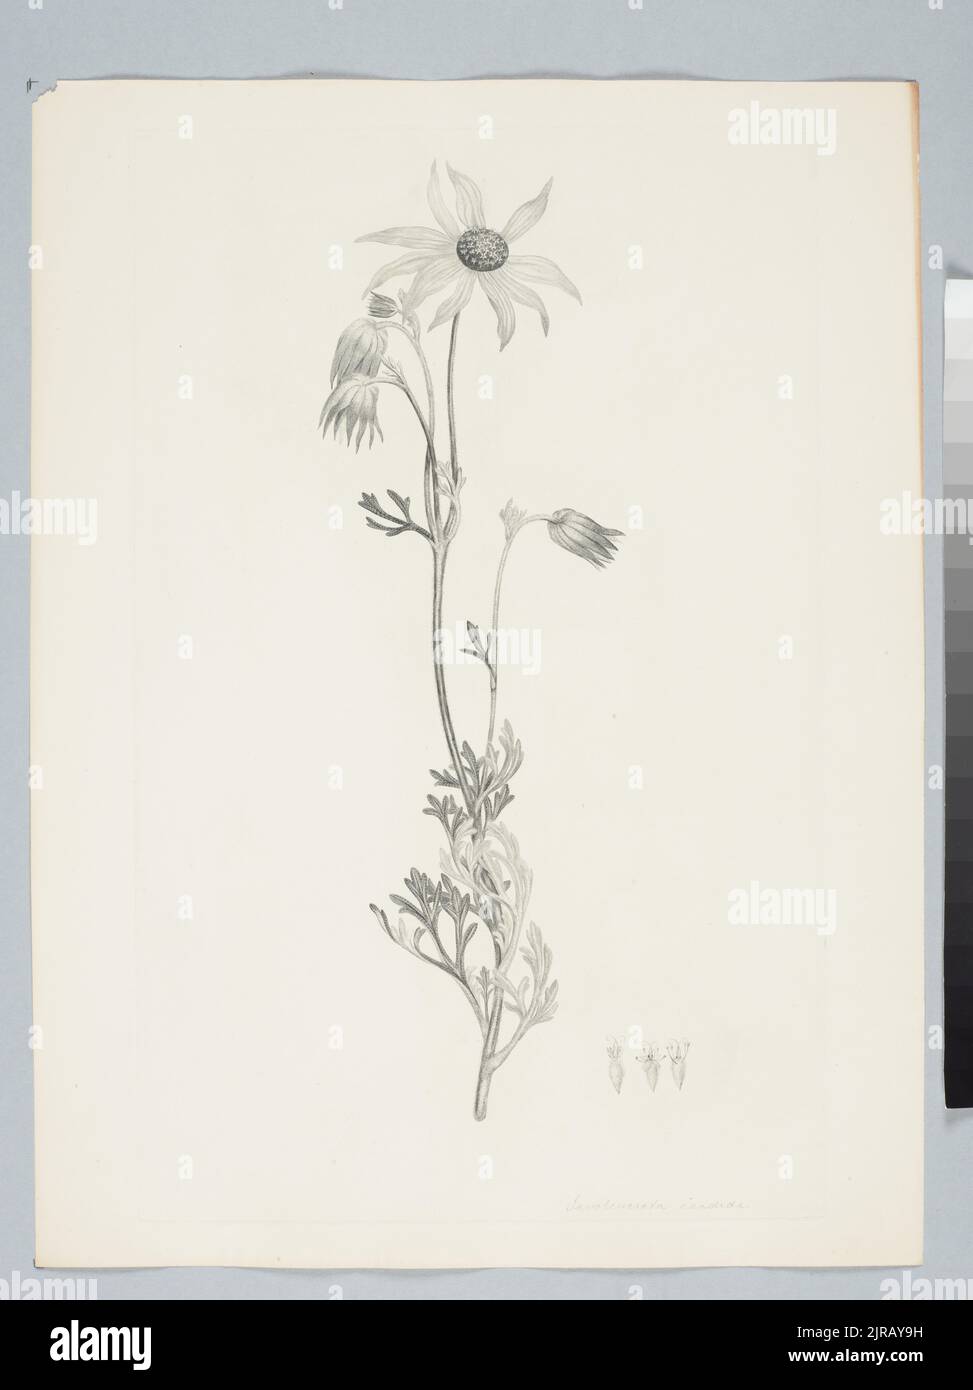 Actinotus helianthi Labillardiere, by Sydney Parkinson. Gift of the British Museum, 1895. Stock Photo